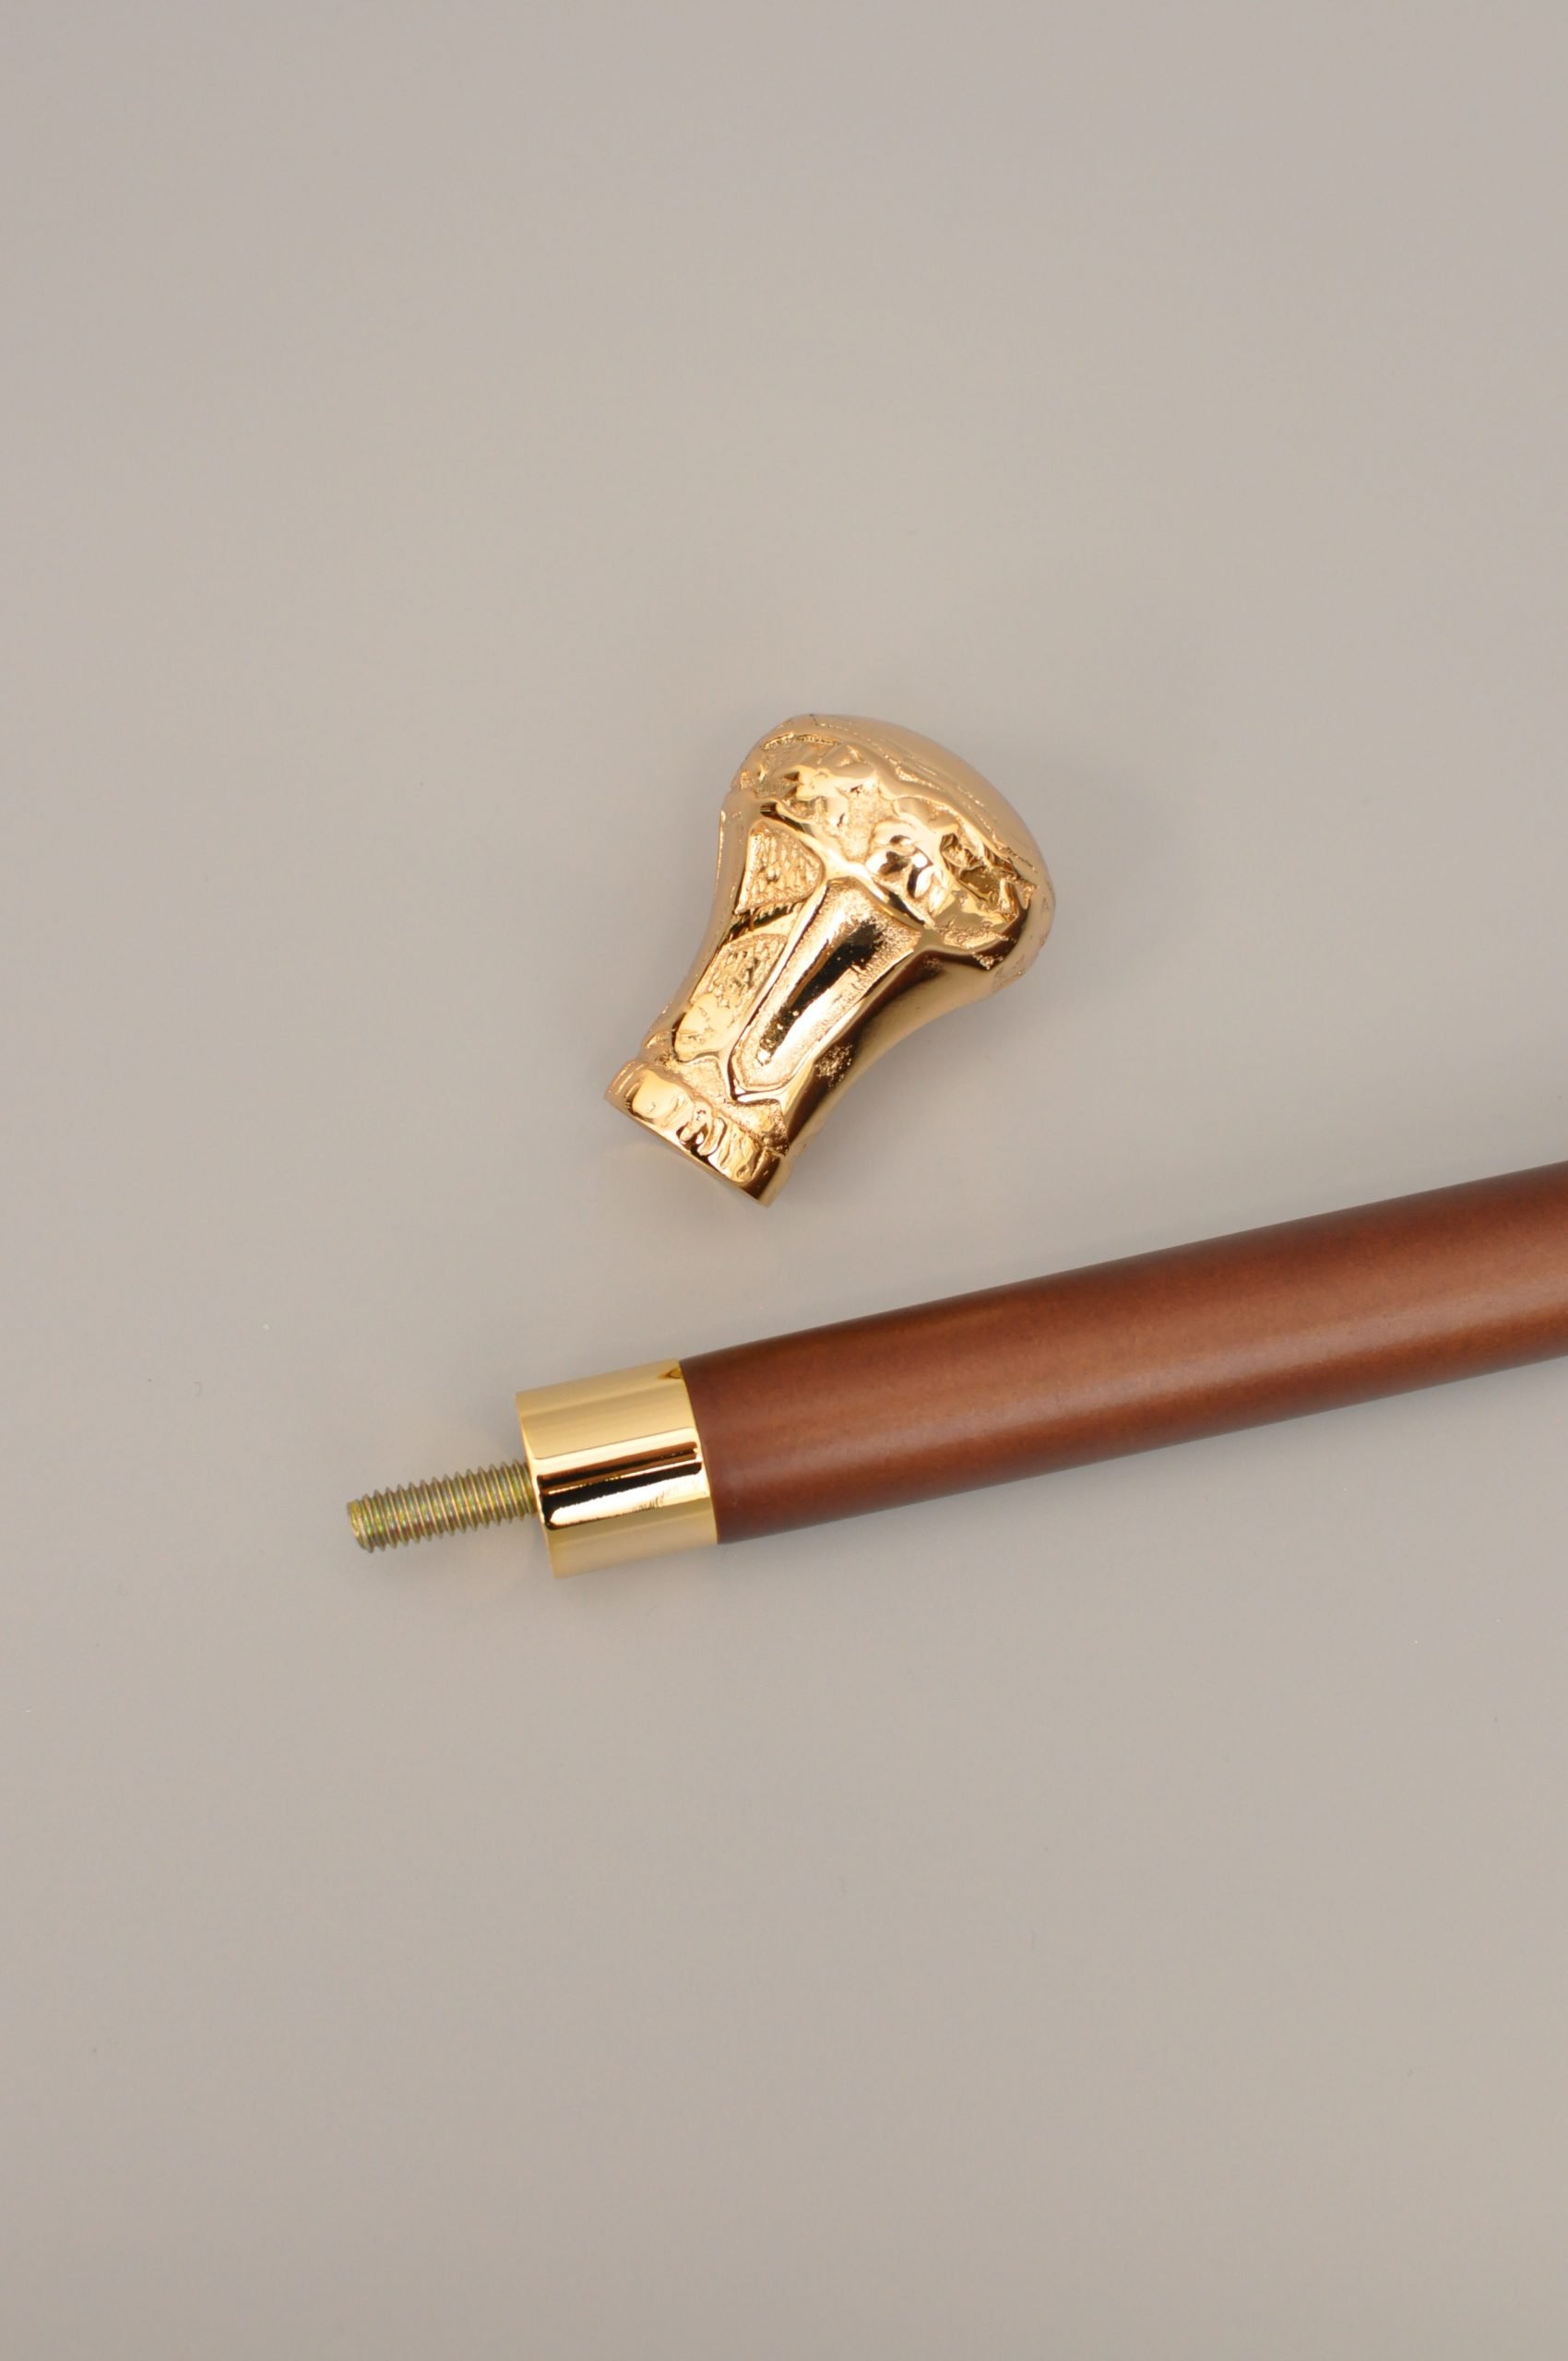 Brass Knob Walking Stick / Taiwan manufacture (1023.002.SMB) - Walking  Stick Cane Manufacturer Supplier